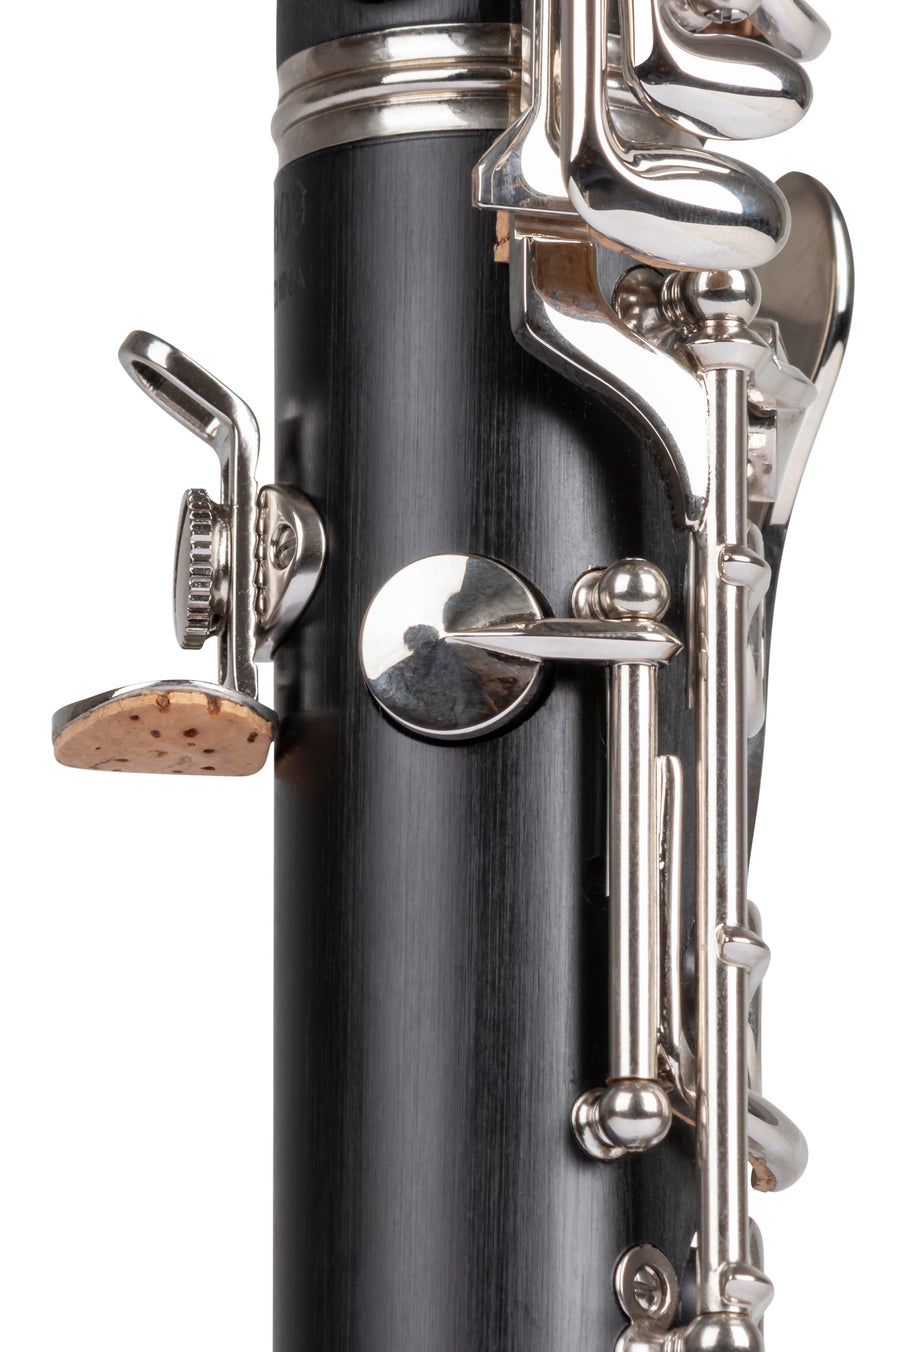 Grassi GR CL300 Clarinet in Bb 17 Keys Pisoni Pads ABS Body Wood Like Finish Black (Master Series)